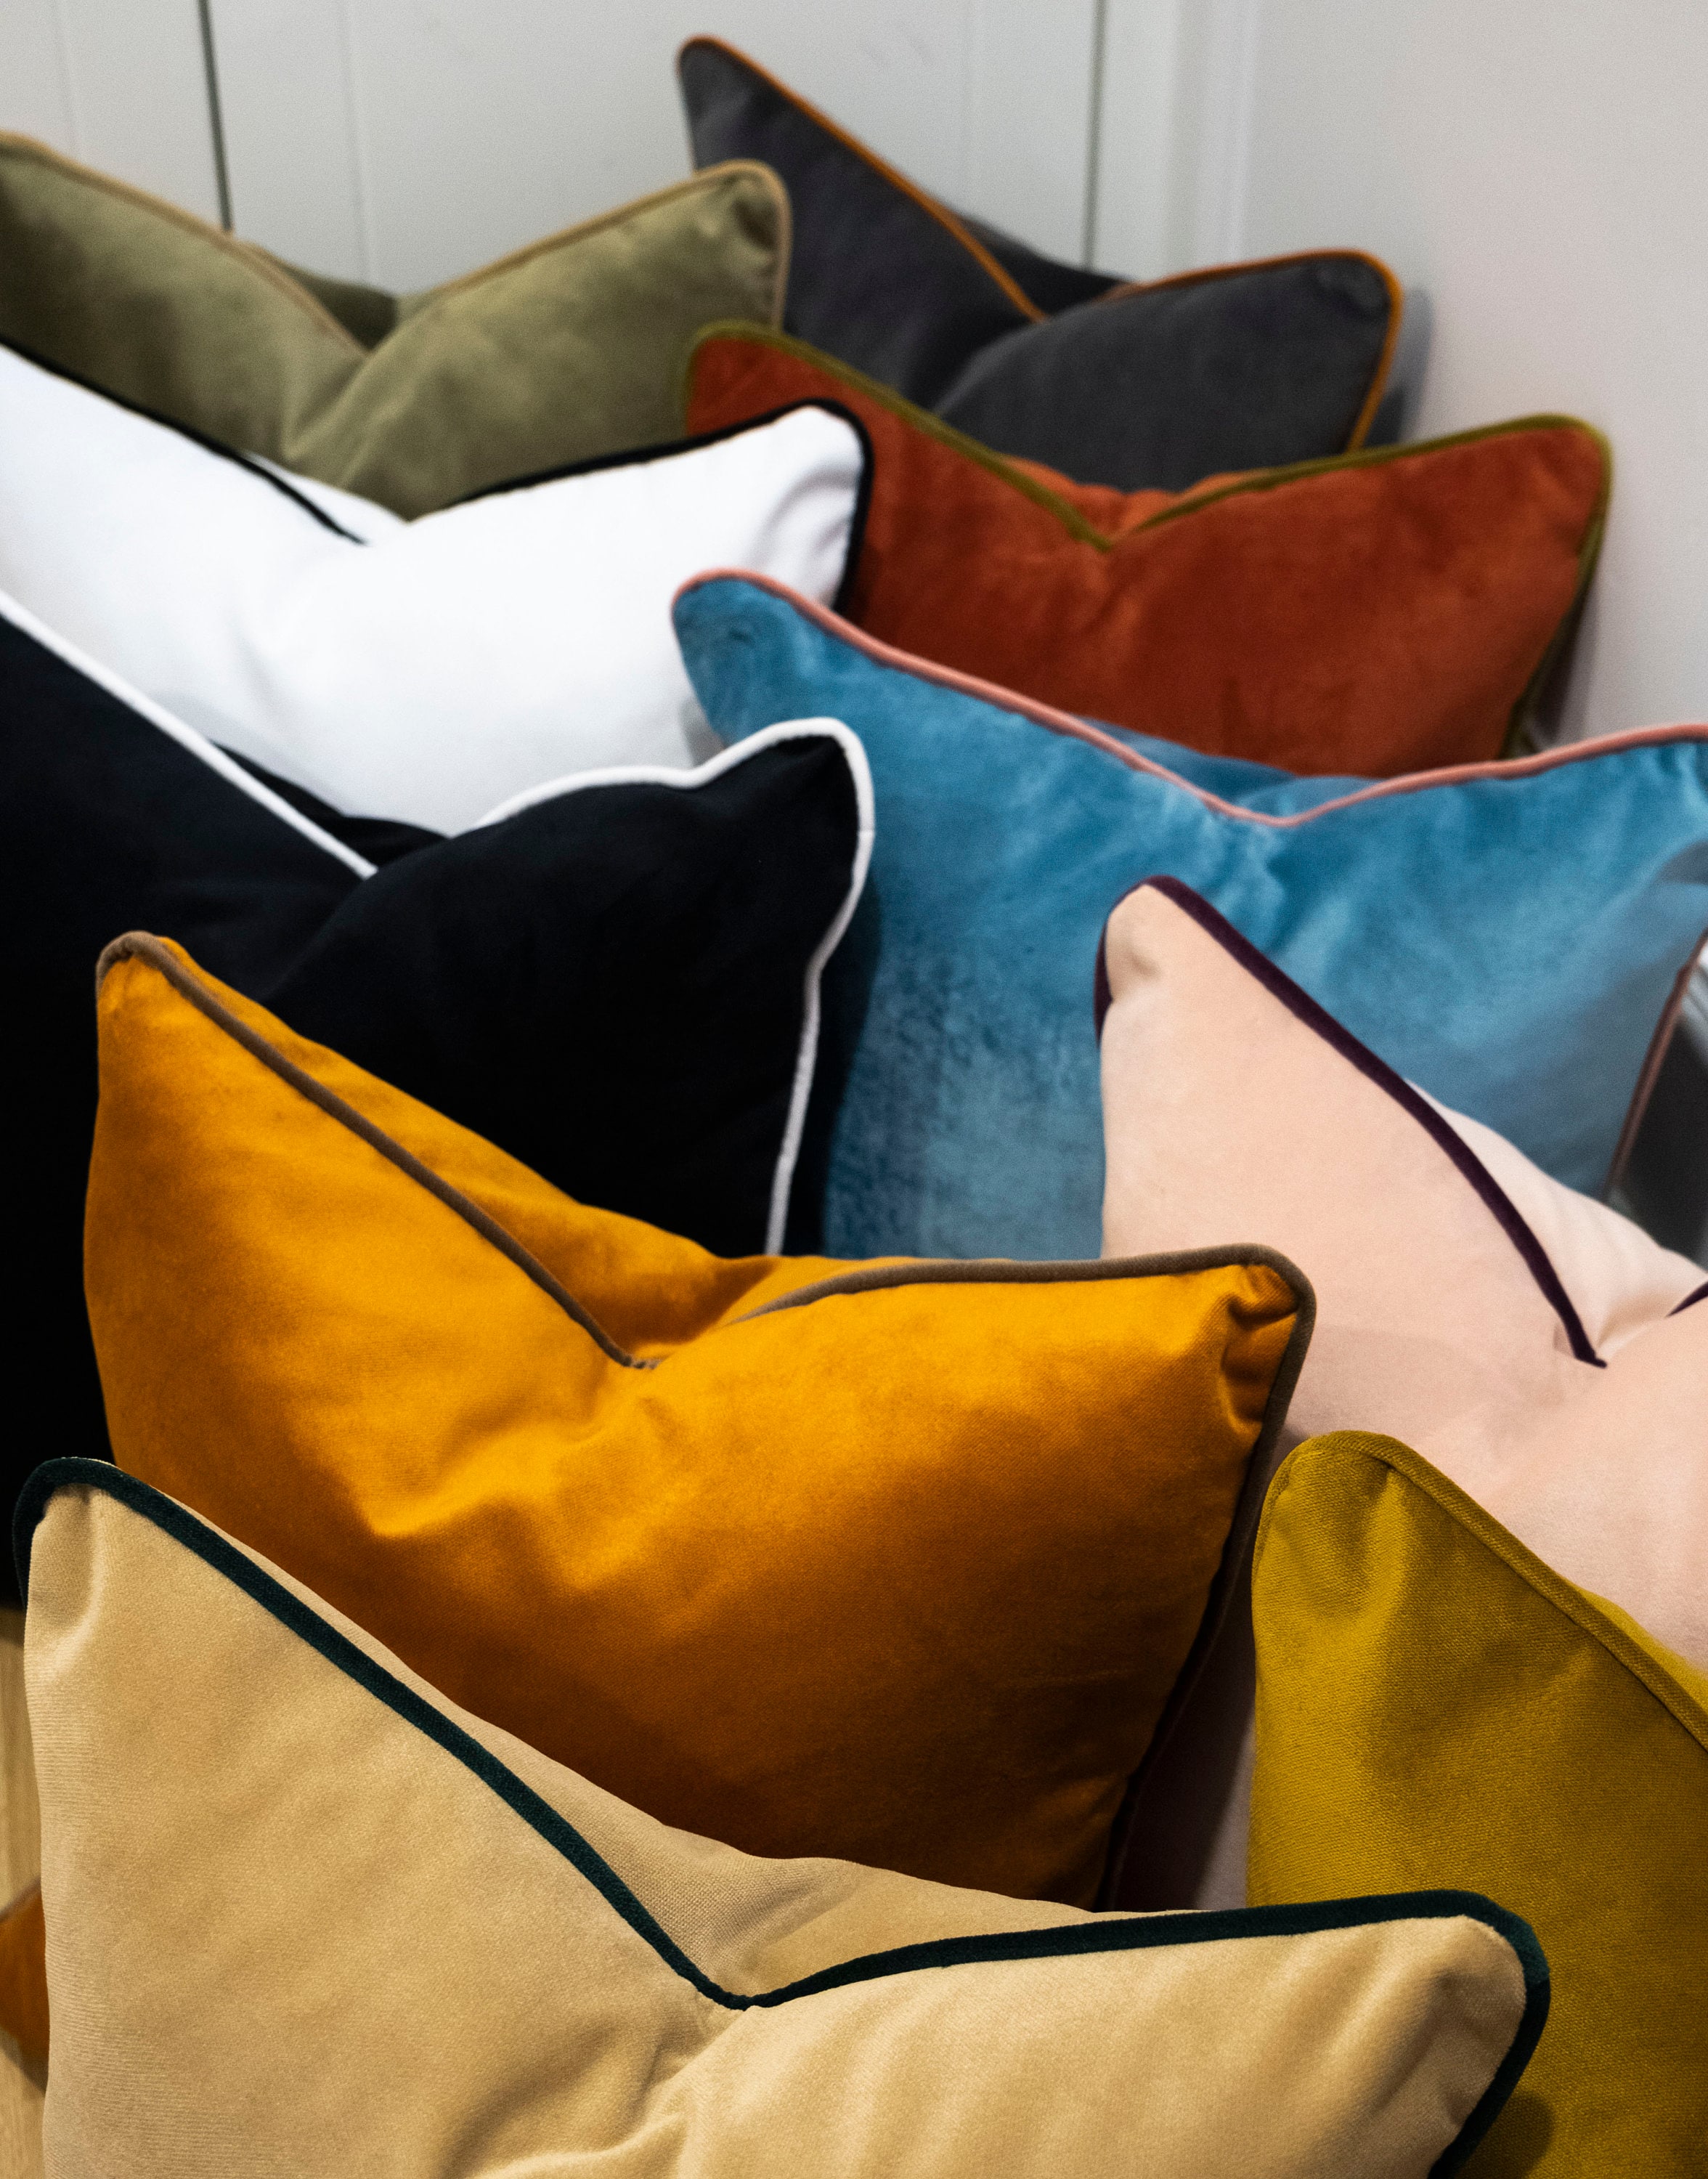 Velvet Yellow Throw Pillow Covers 18x18 Set of 4, Soft Brown Decorative  Pillows